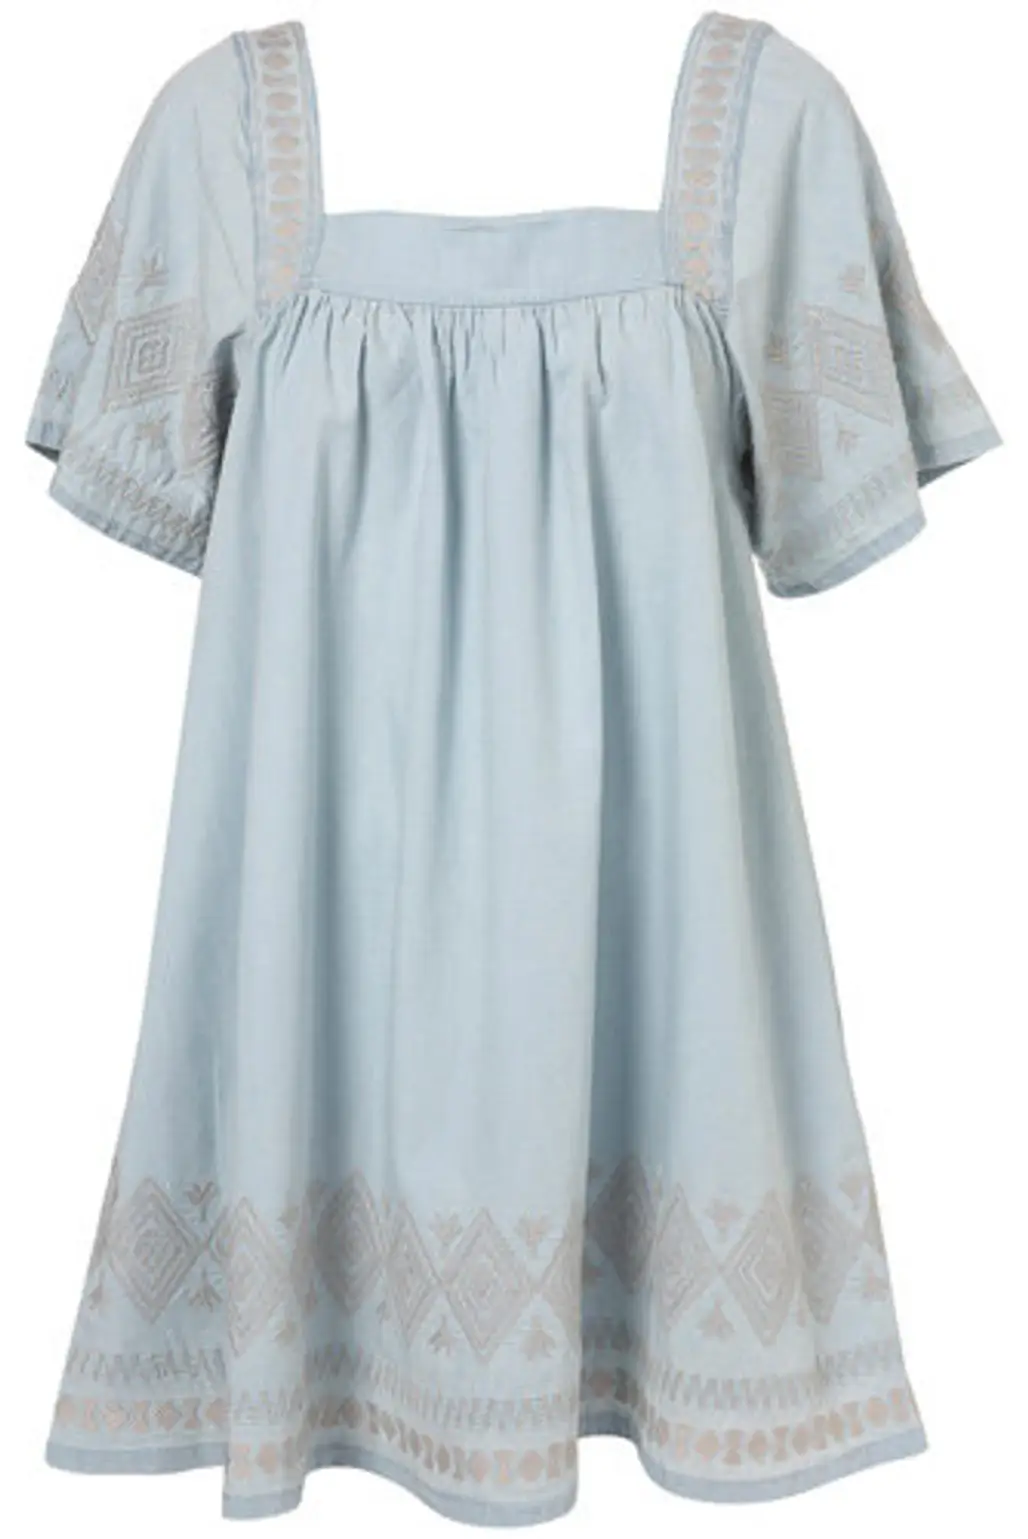 Topshop Pale Denim Embroidered Dress